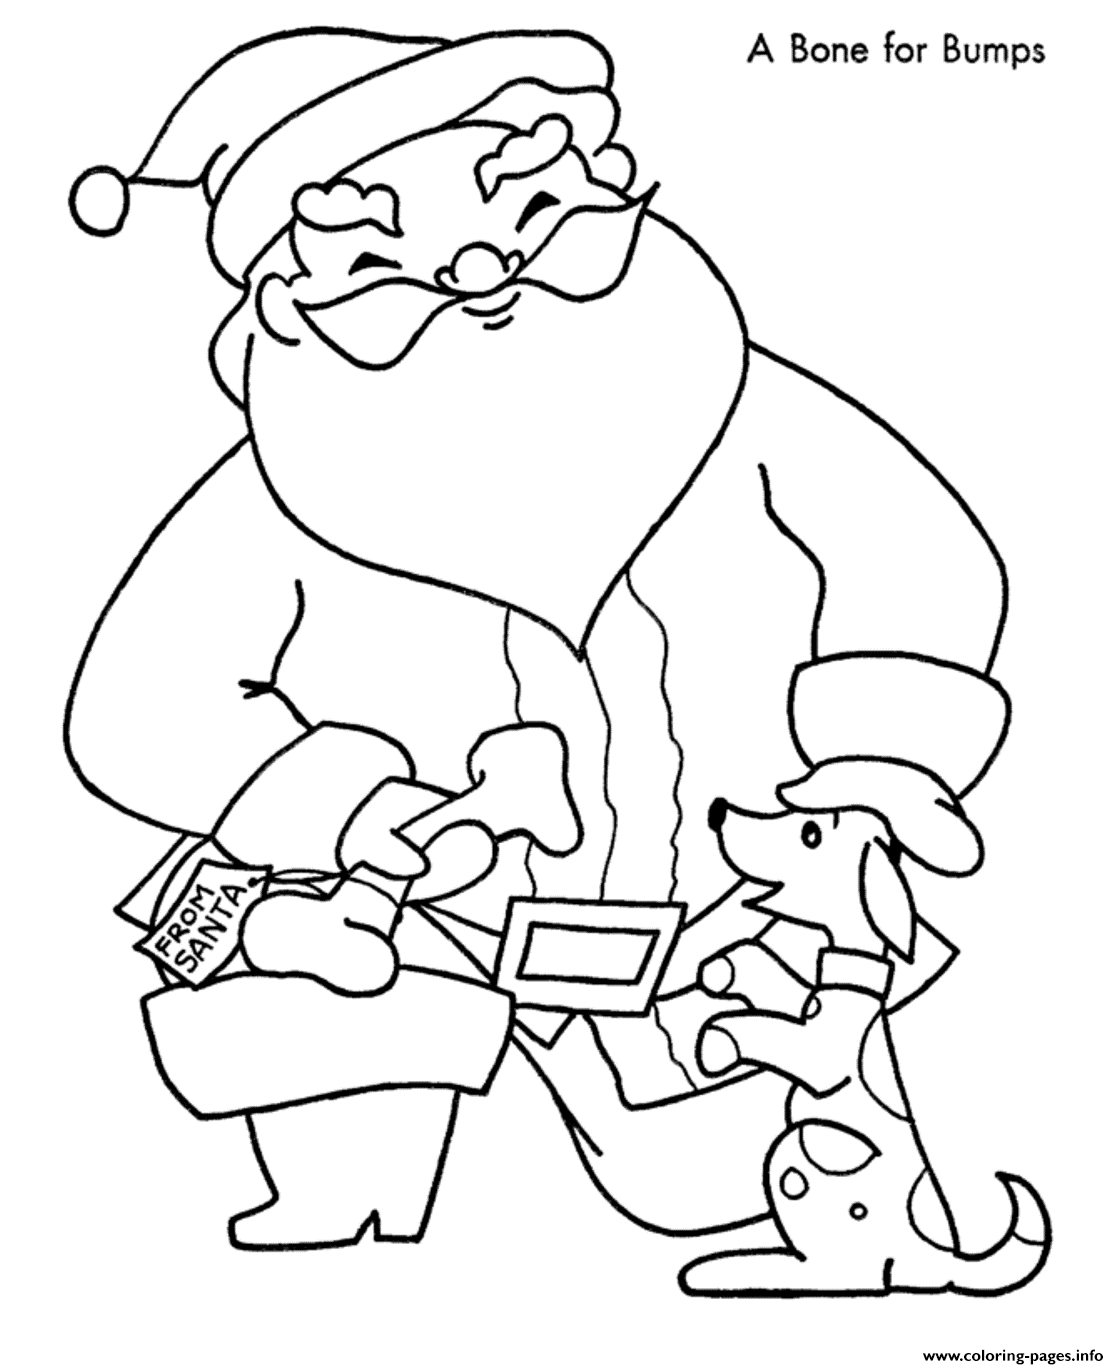 Santa Gives A Bone For Bumps Christmas S Printable6a69 coloring